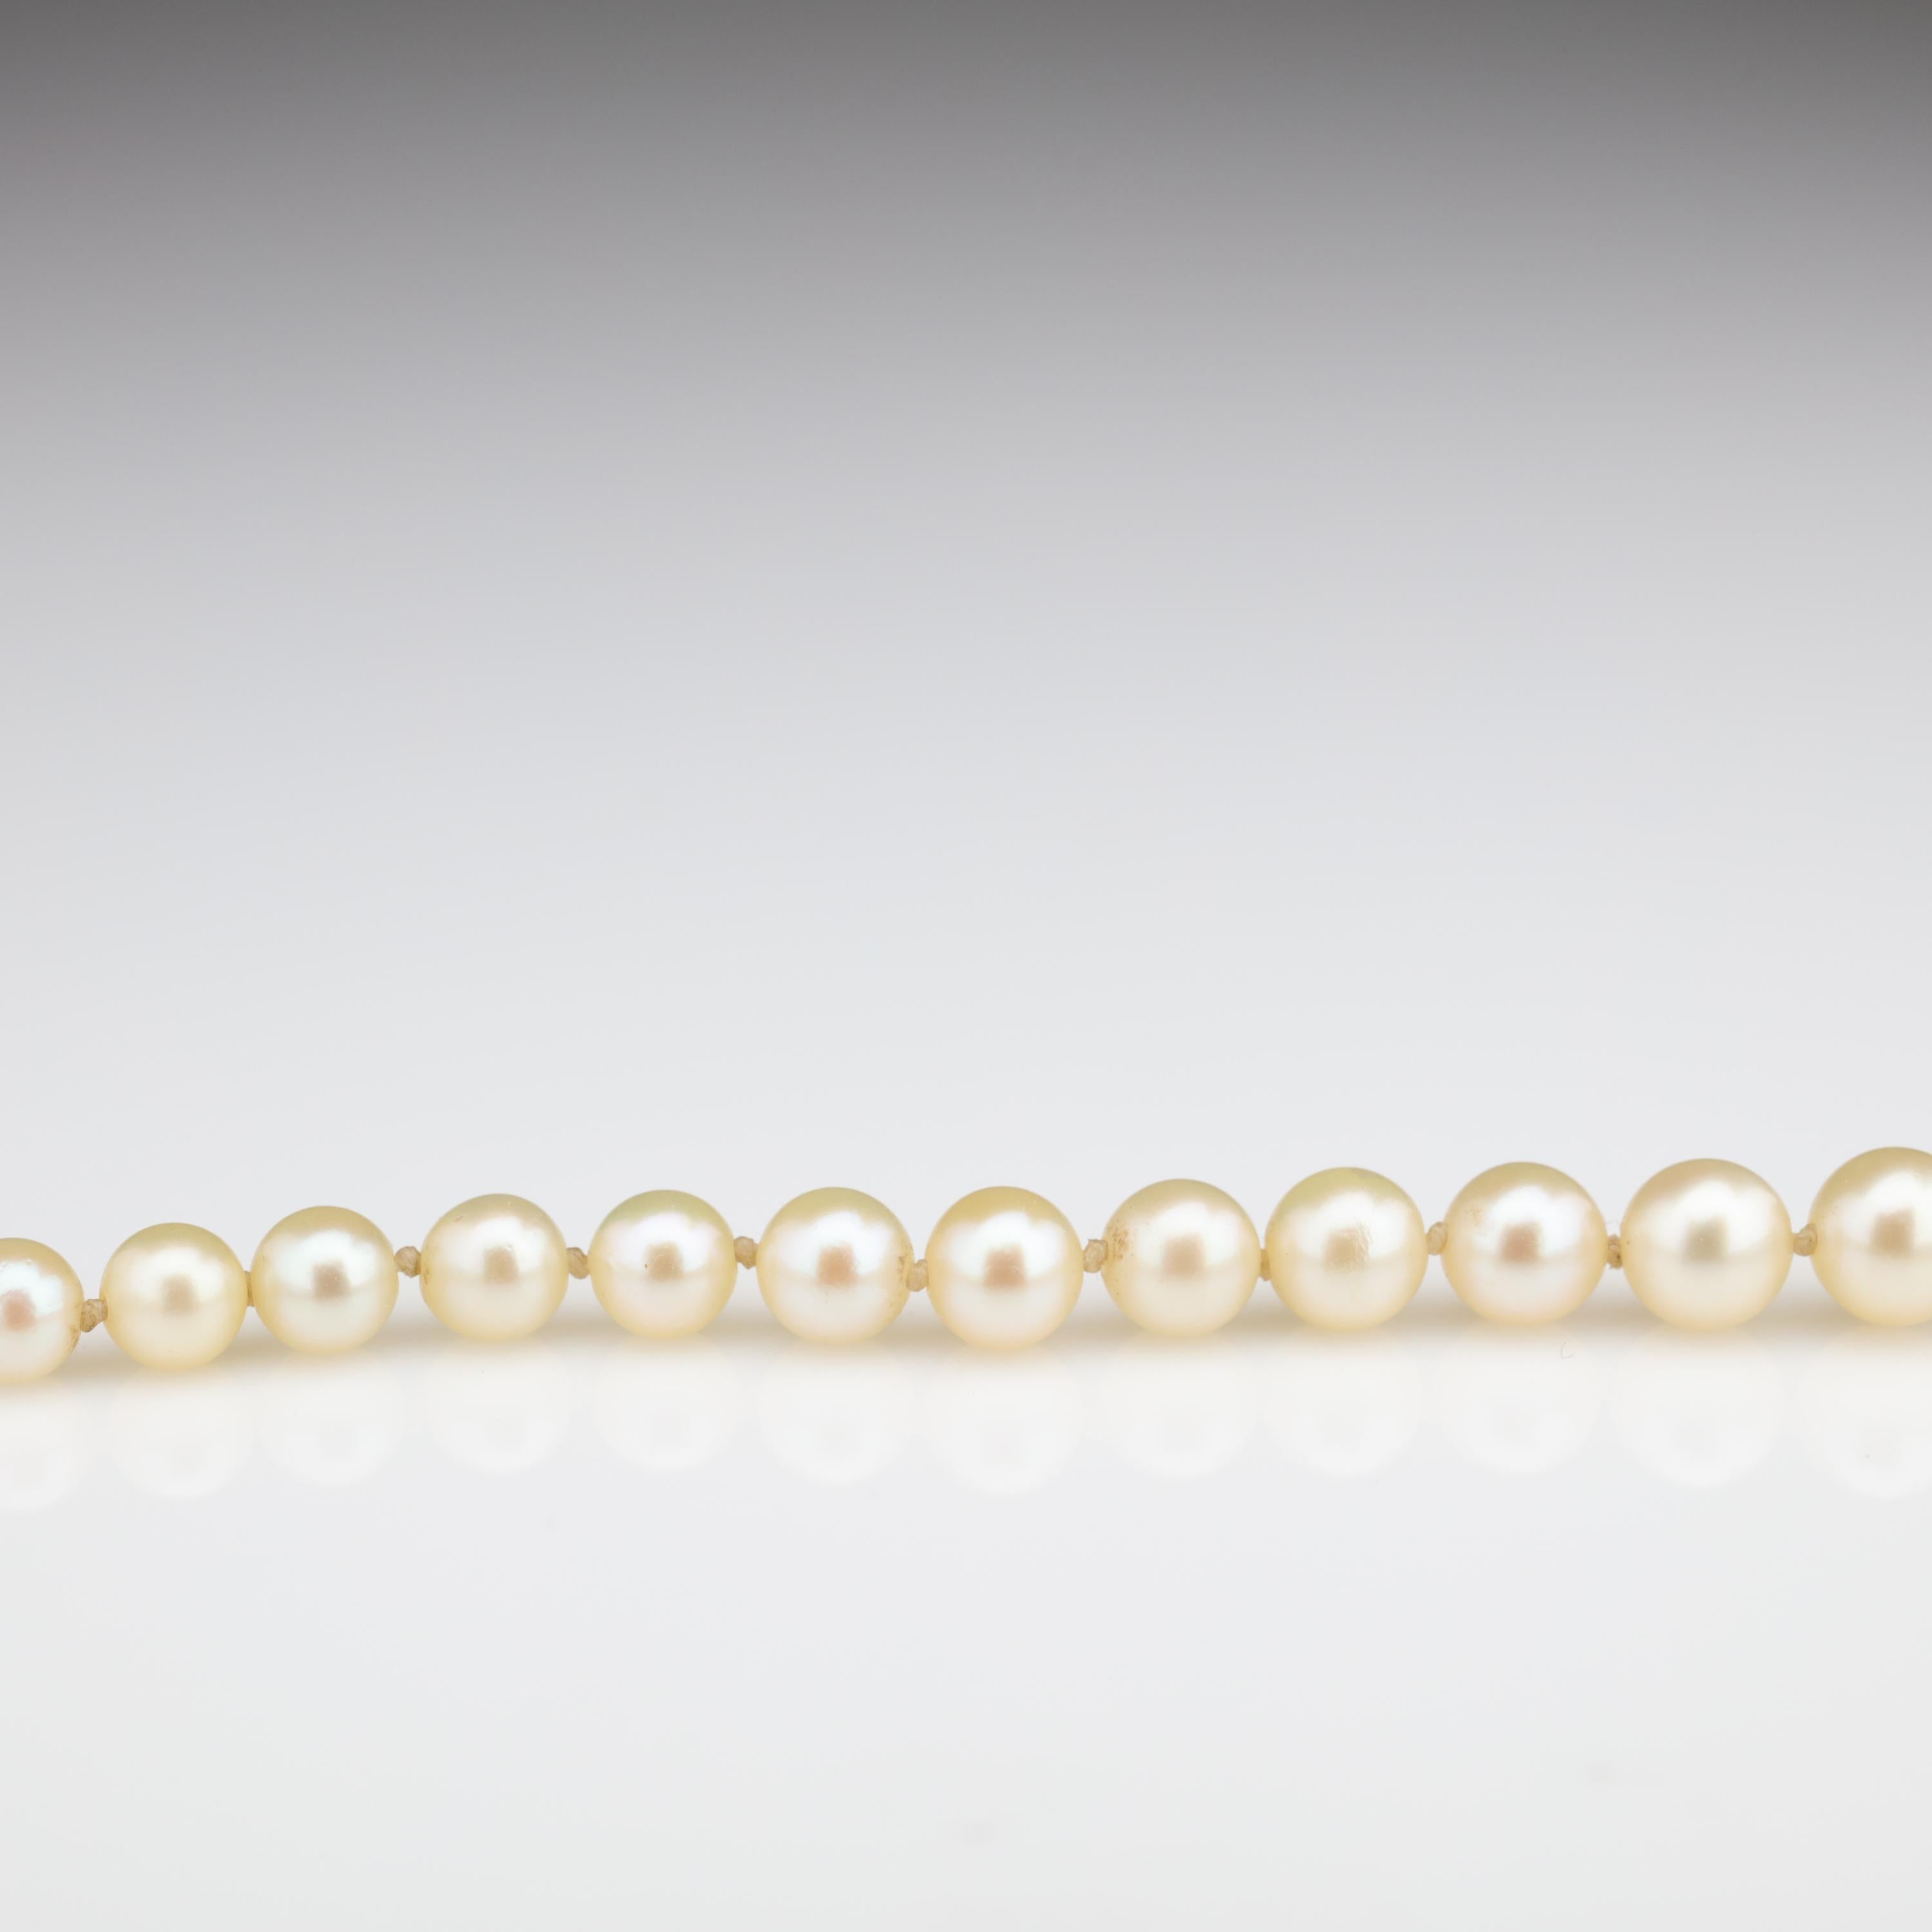 Mikimoto Original Strand of First Viable Cultured Pearls, circa 1920s 1